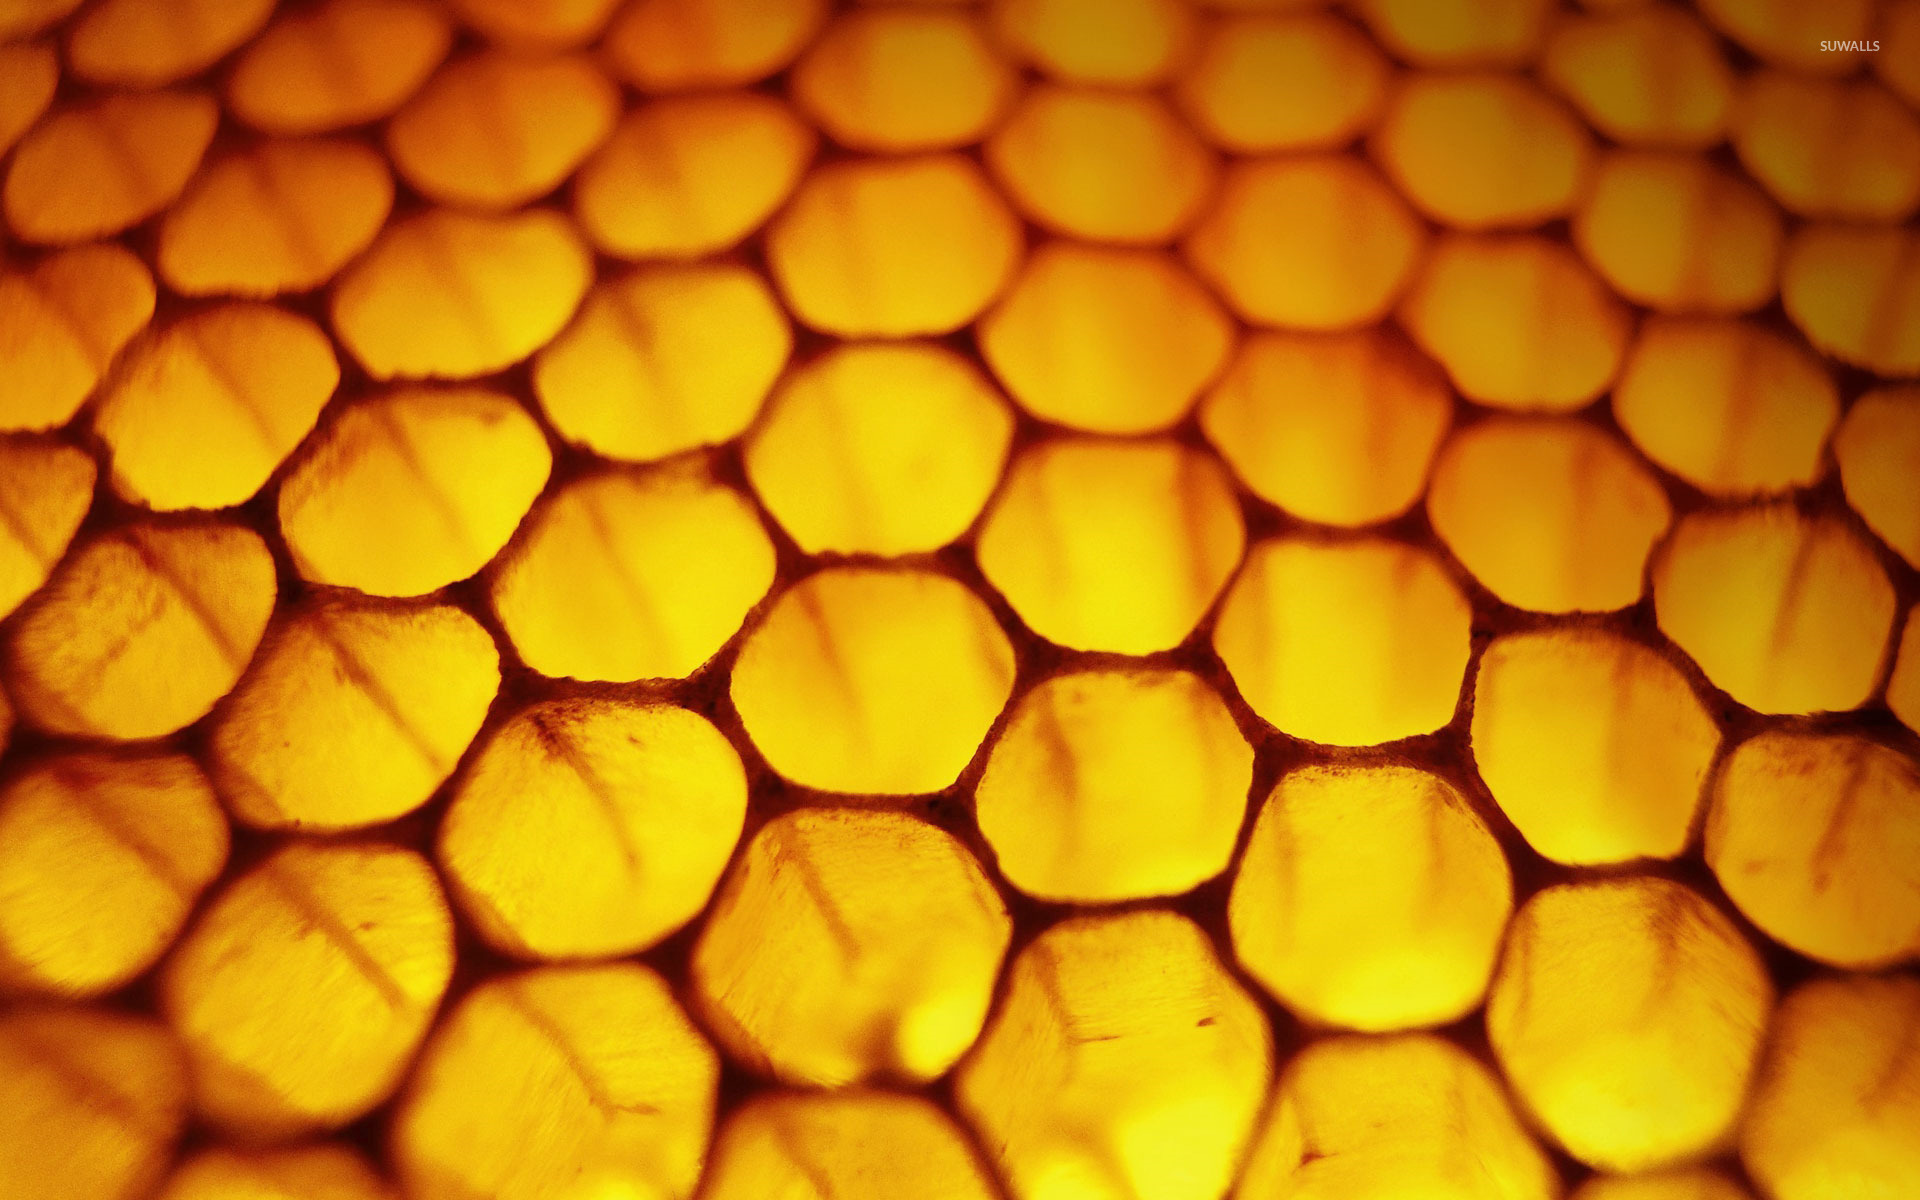 Honeyb Wallpaper